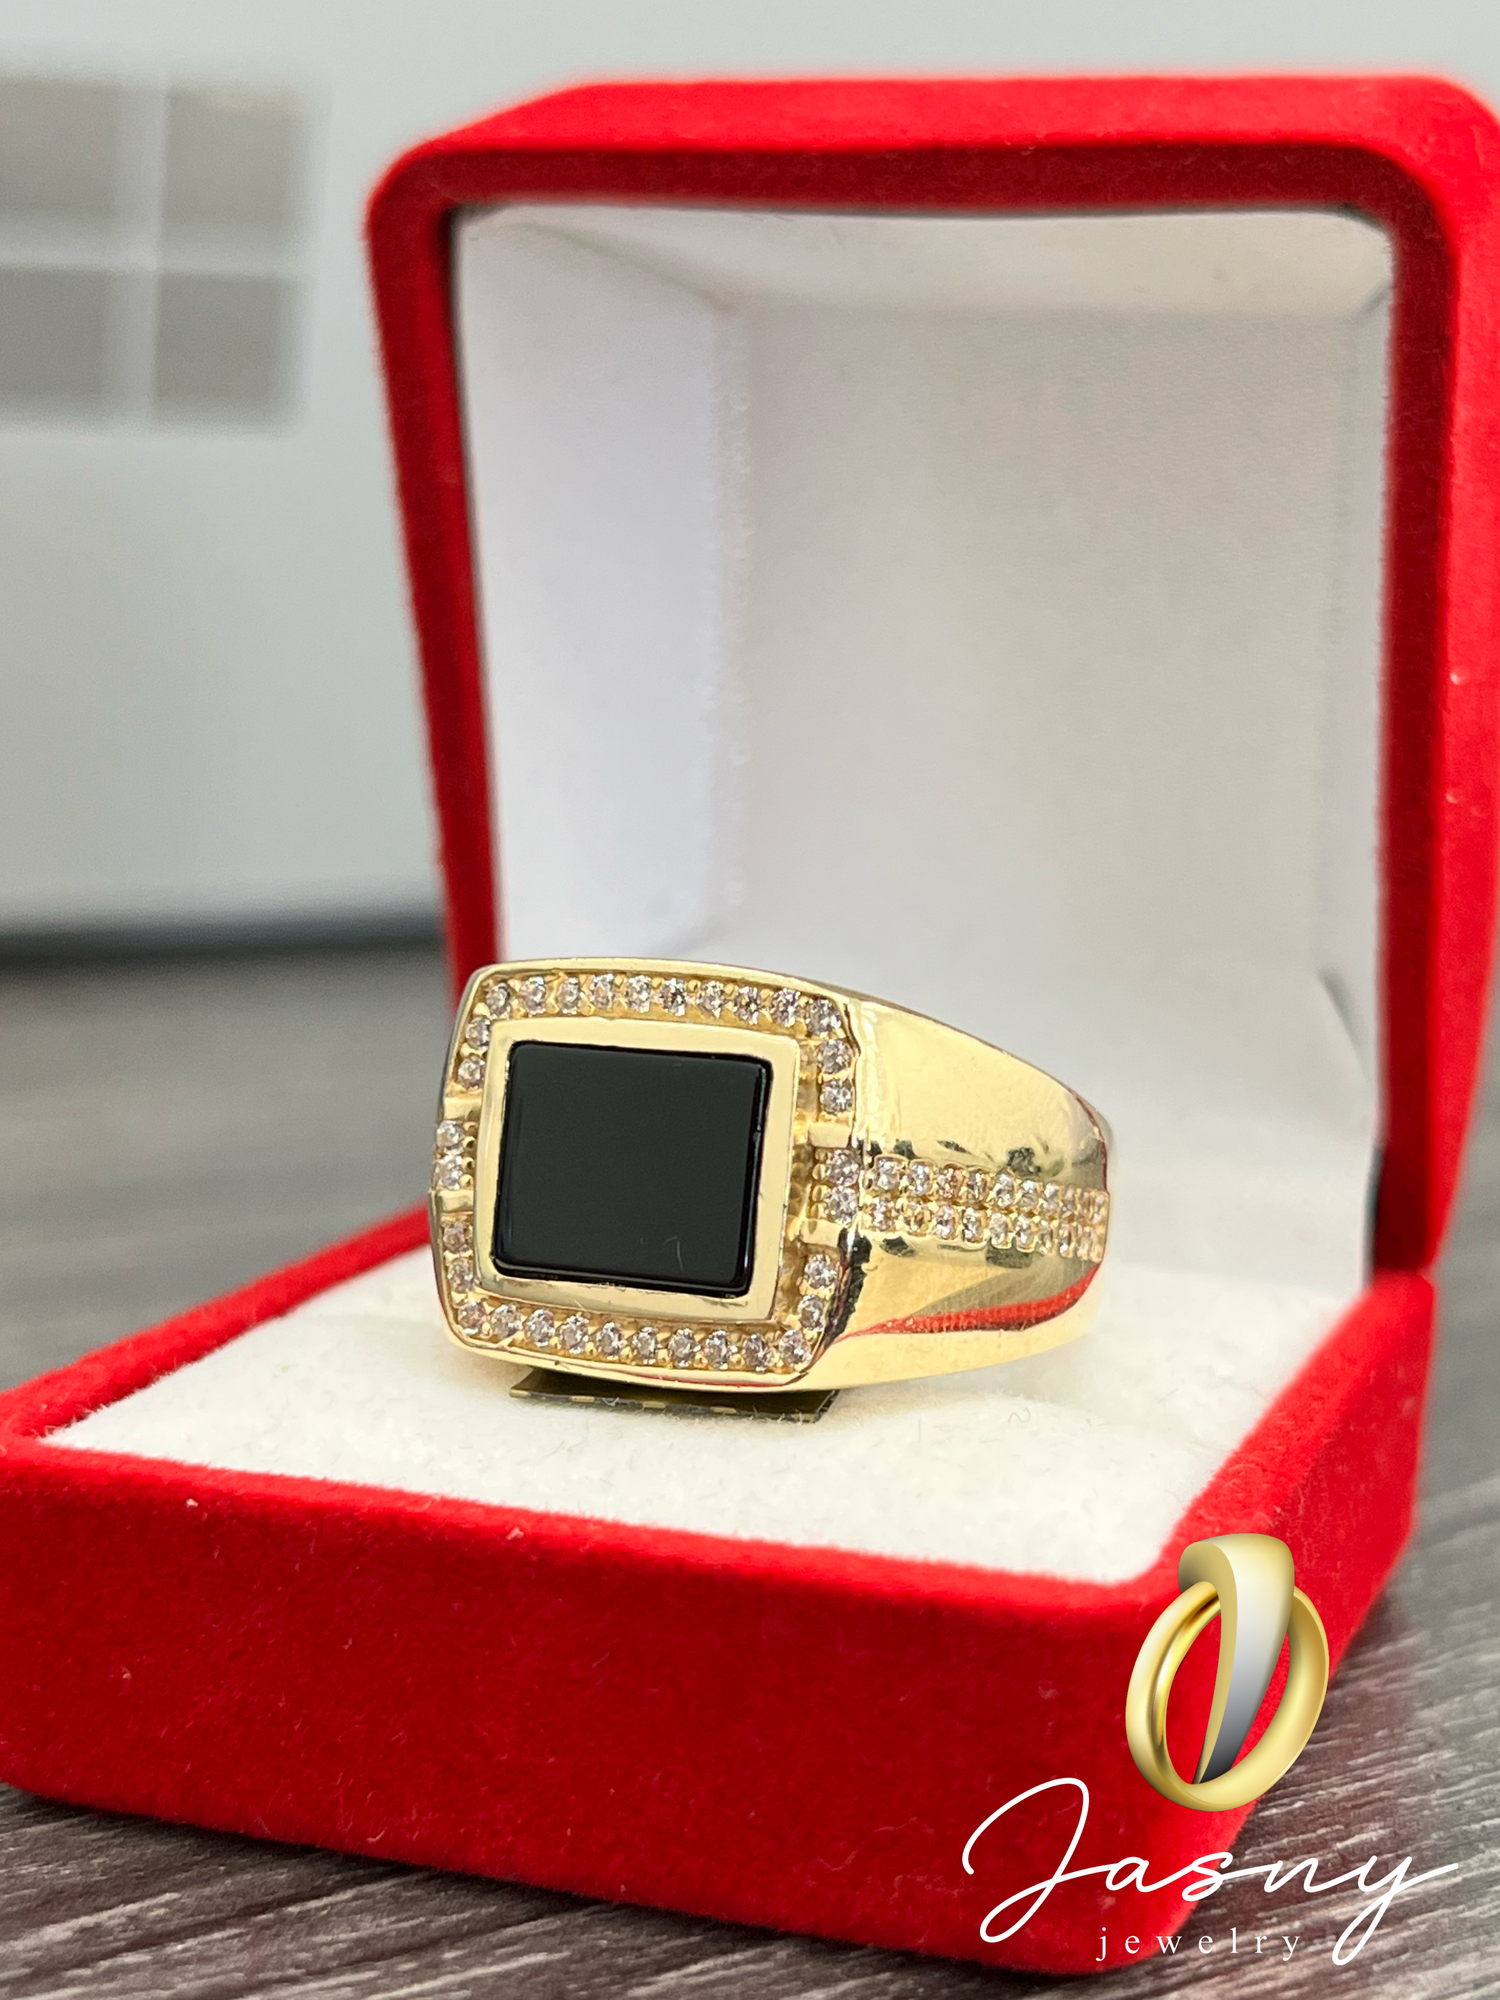 ANILLO 14K, PIEDRA NEGRA / 14K RING, BLACK STONE – Jasny Jewelry